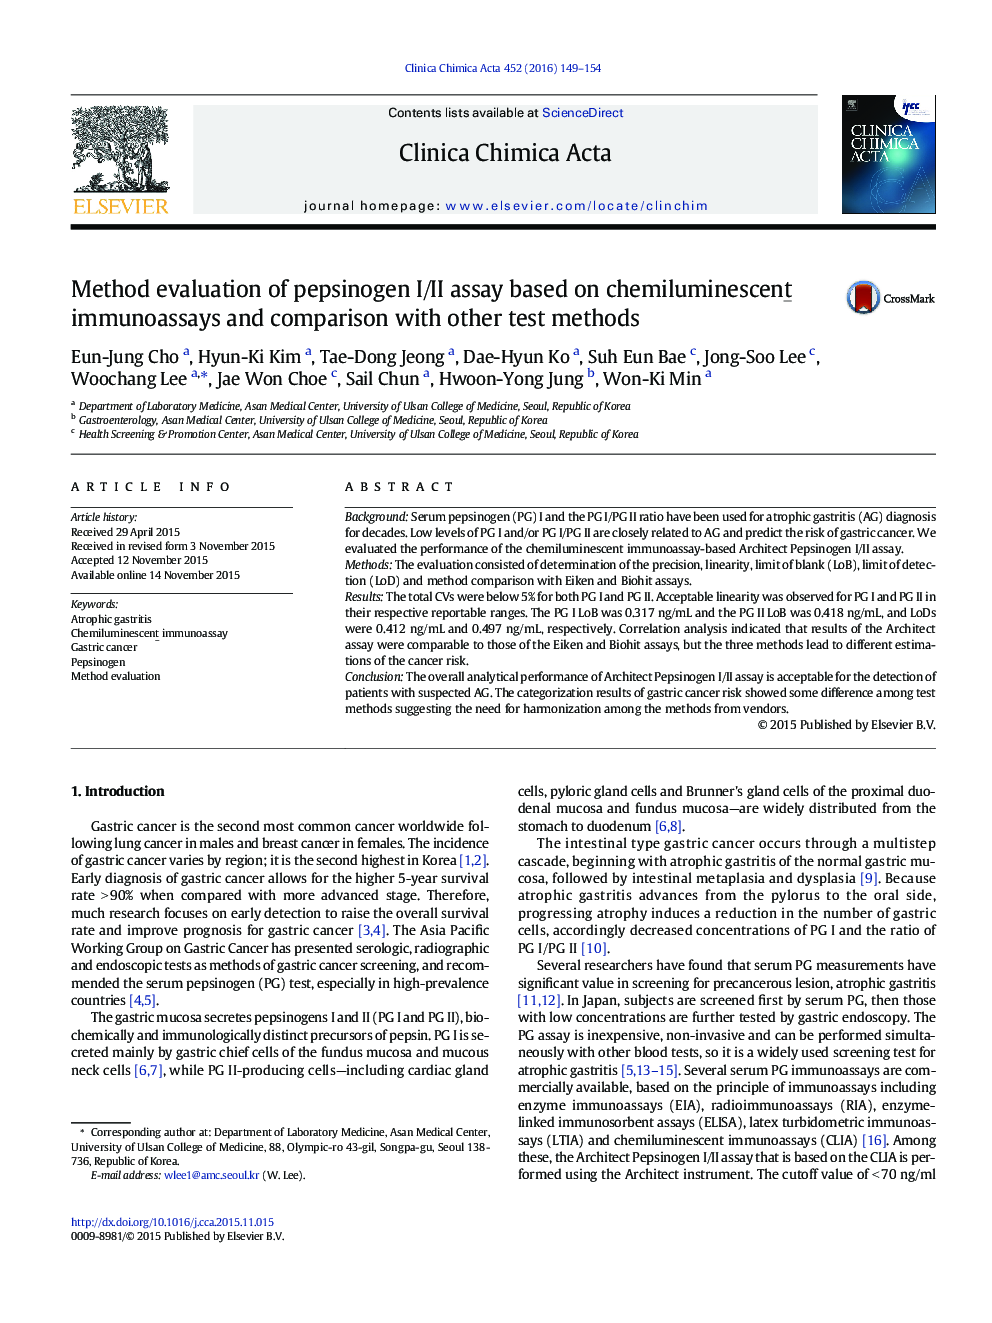 Method evaluation of pepsinogen I/II assay based on chemiluminescent immunoassays and comparison with other test methods